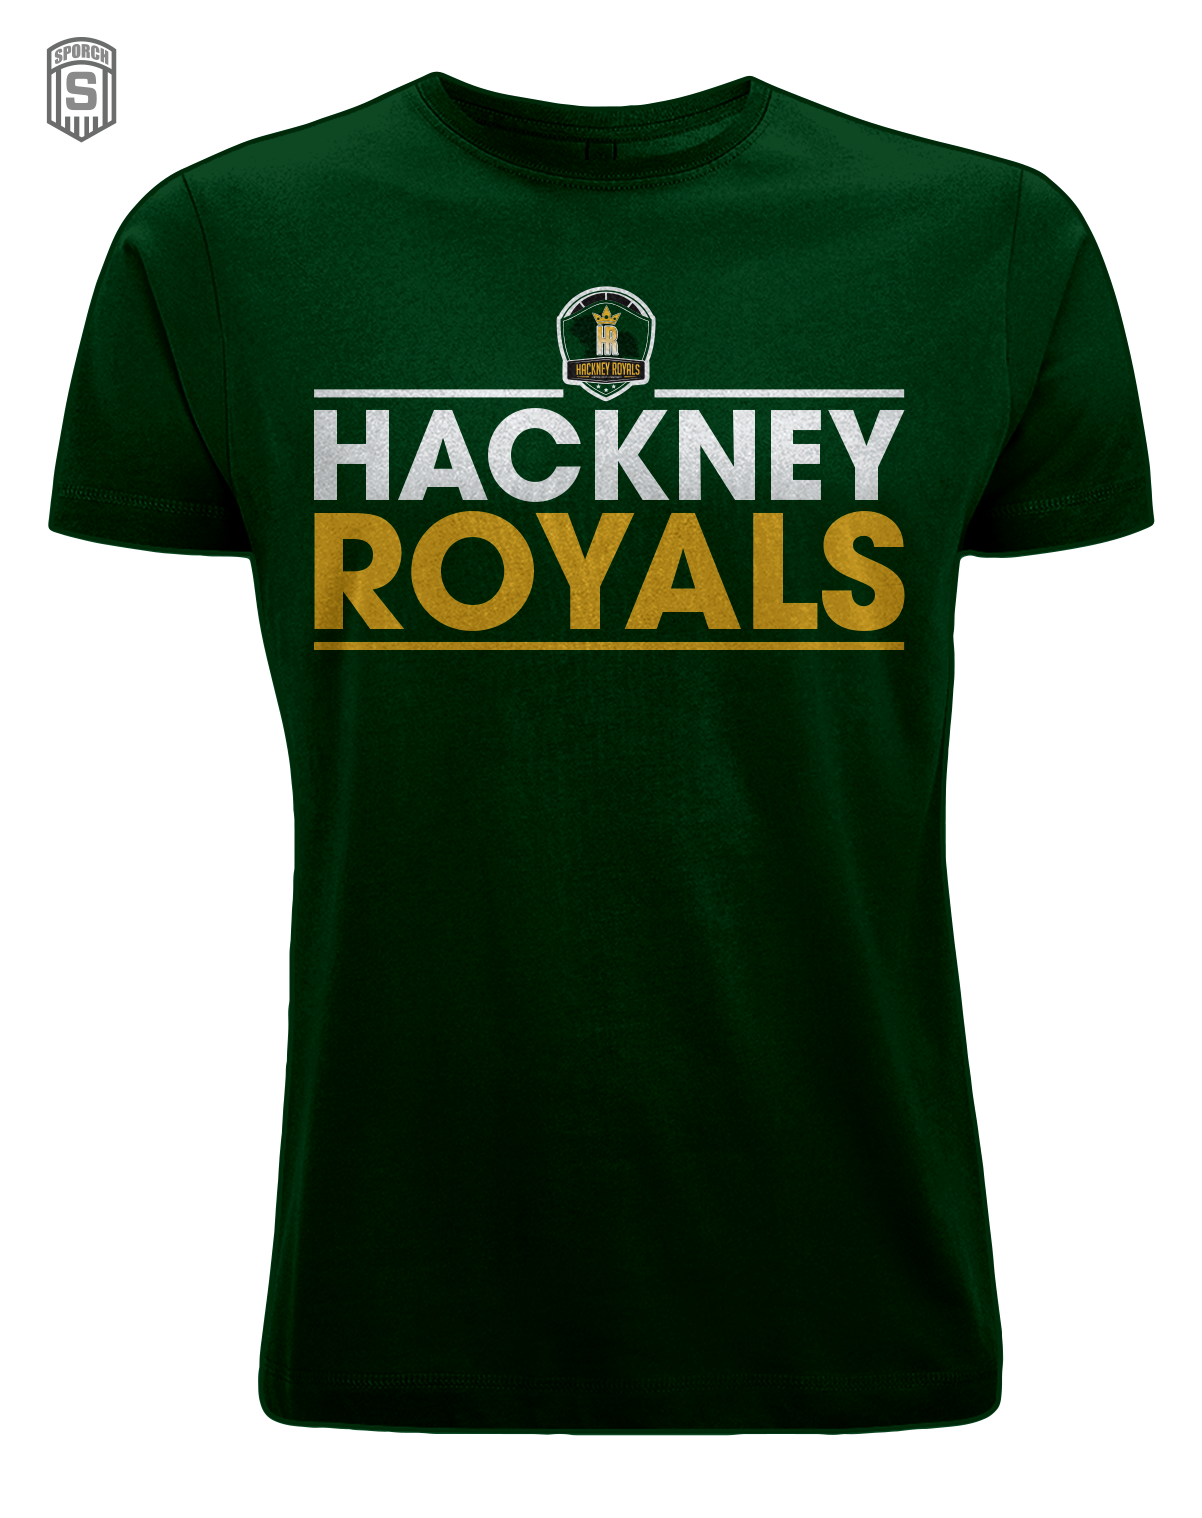 green royals jersey